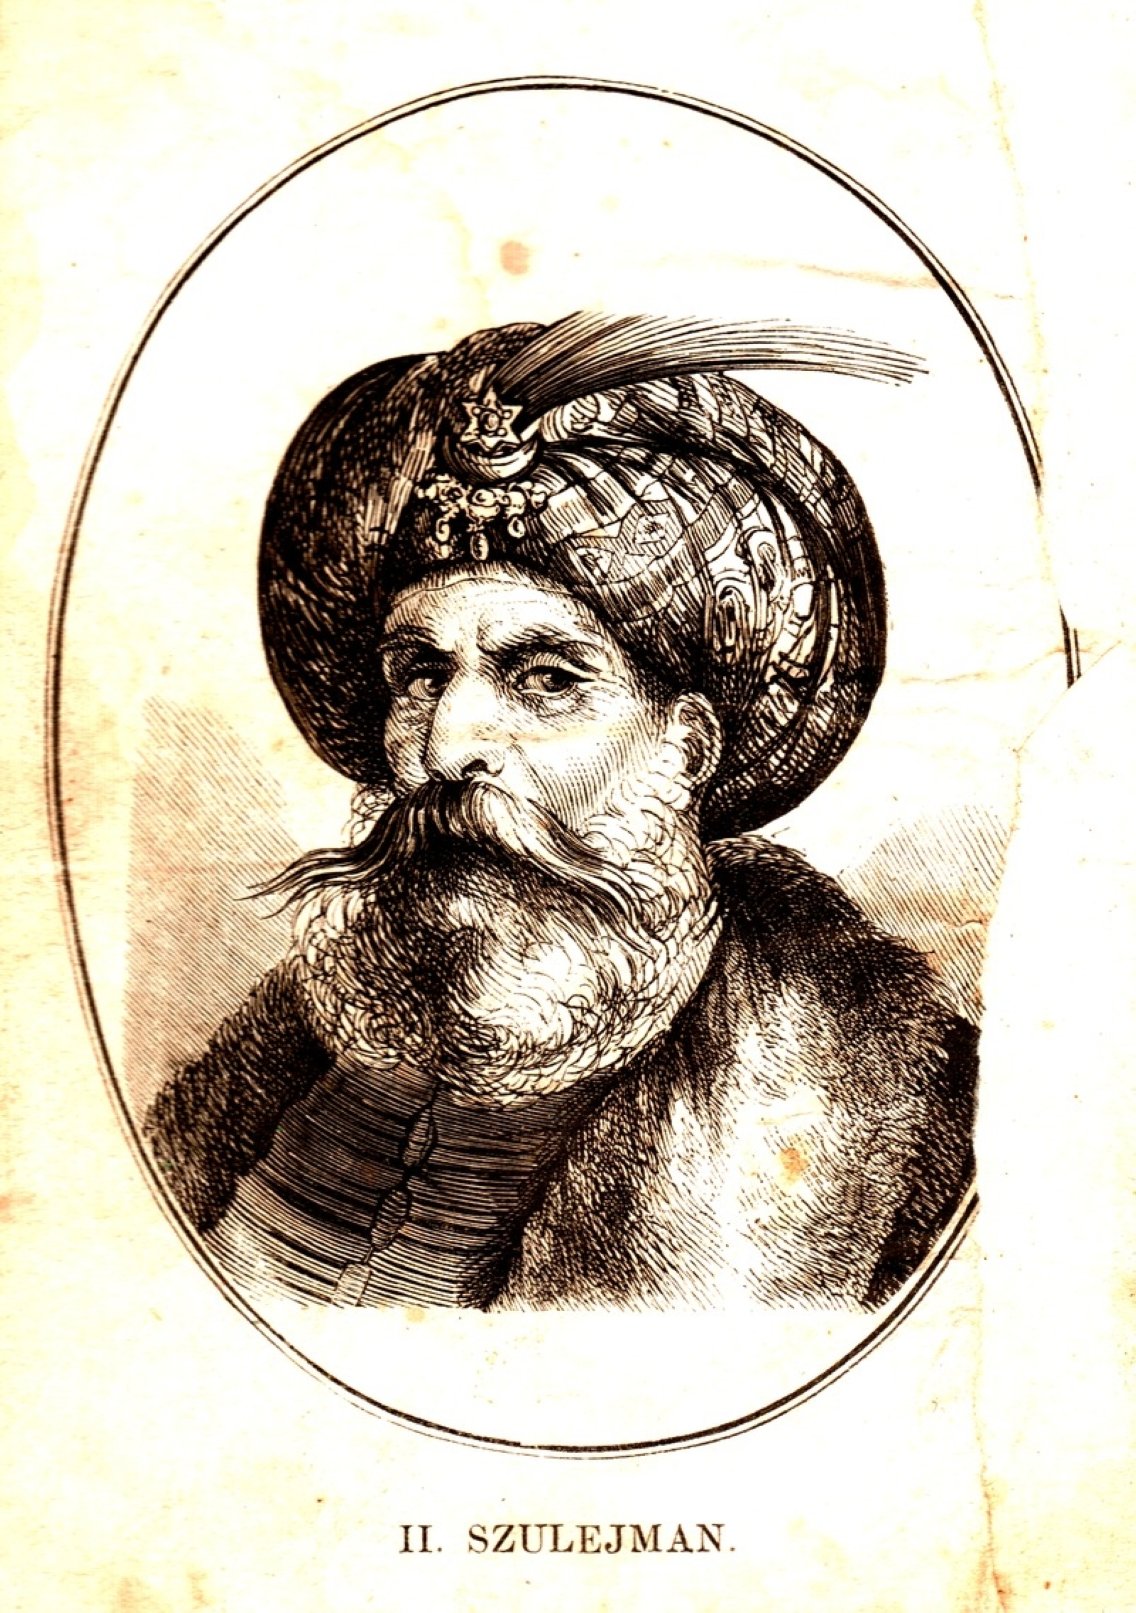 A depiction of Sultan Suleiman II.